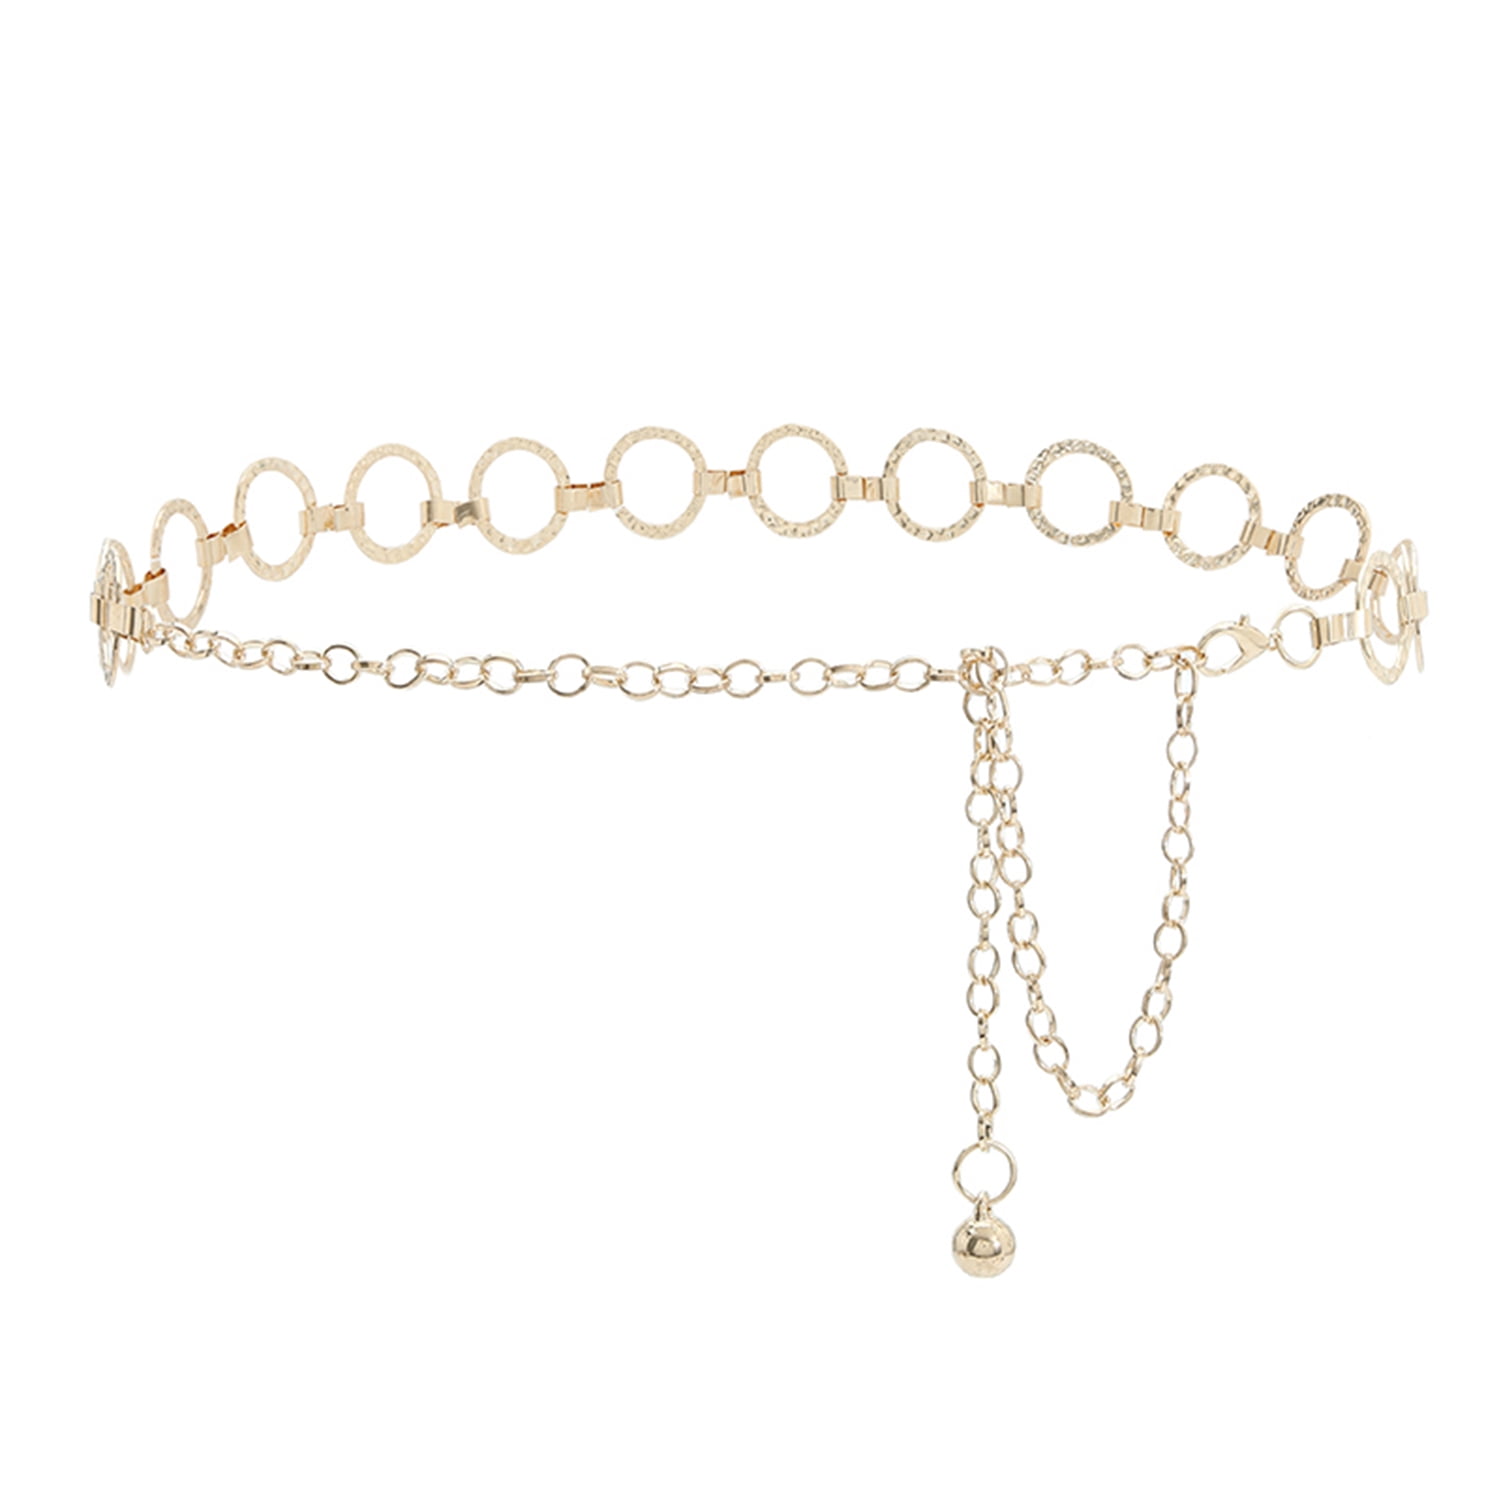 Jdlsppl Women's Metal Belt Waist Chain Dress Belts Chunky Rhinestone Buckle  Siver/ Gold Style6 One Size